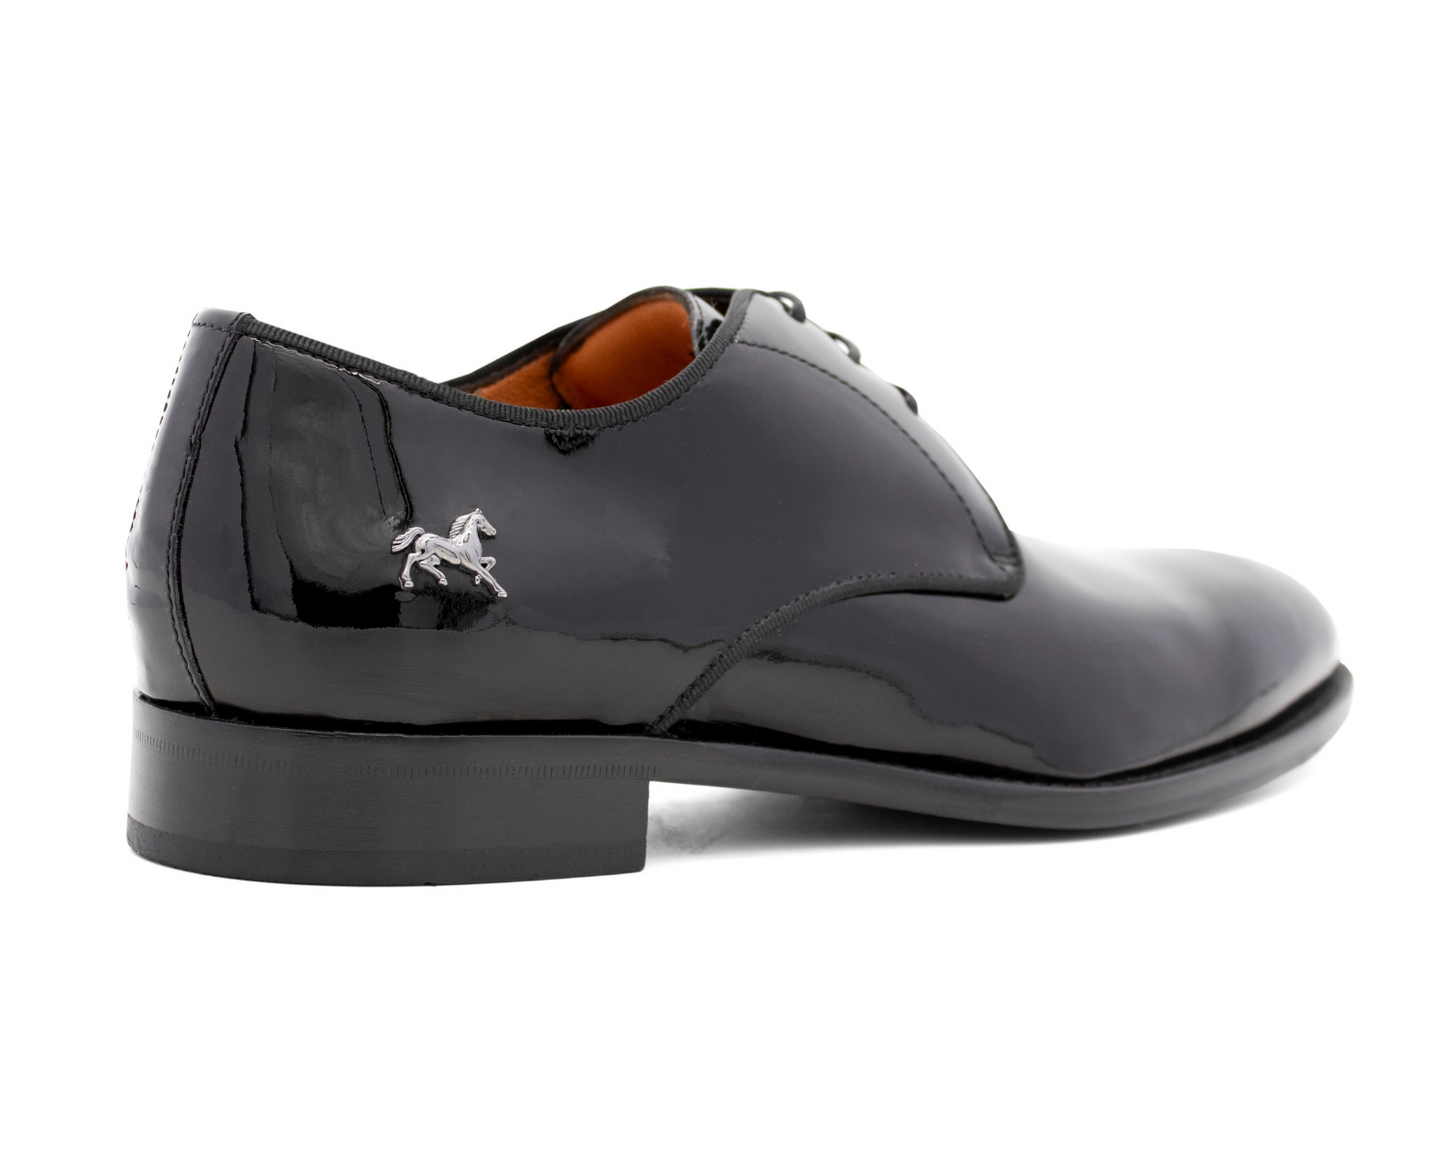 #color_ Black | Cavalinho Patent Leather Oxford Shoes - Black - 3_3fbcf51a-df36-4207-955e-38eccfa7c6a7